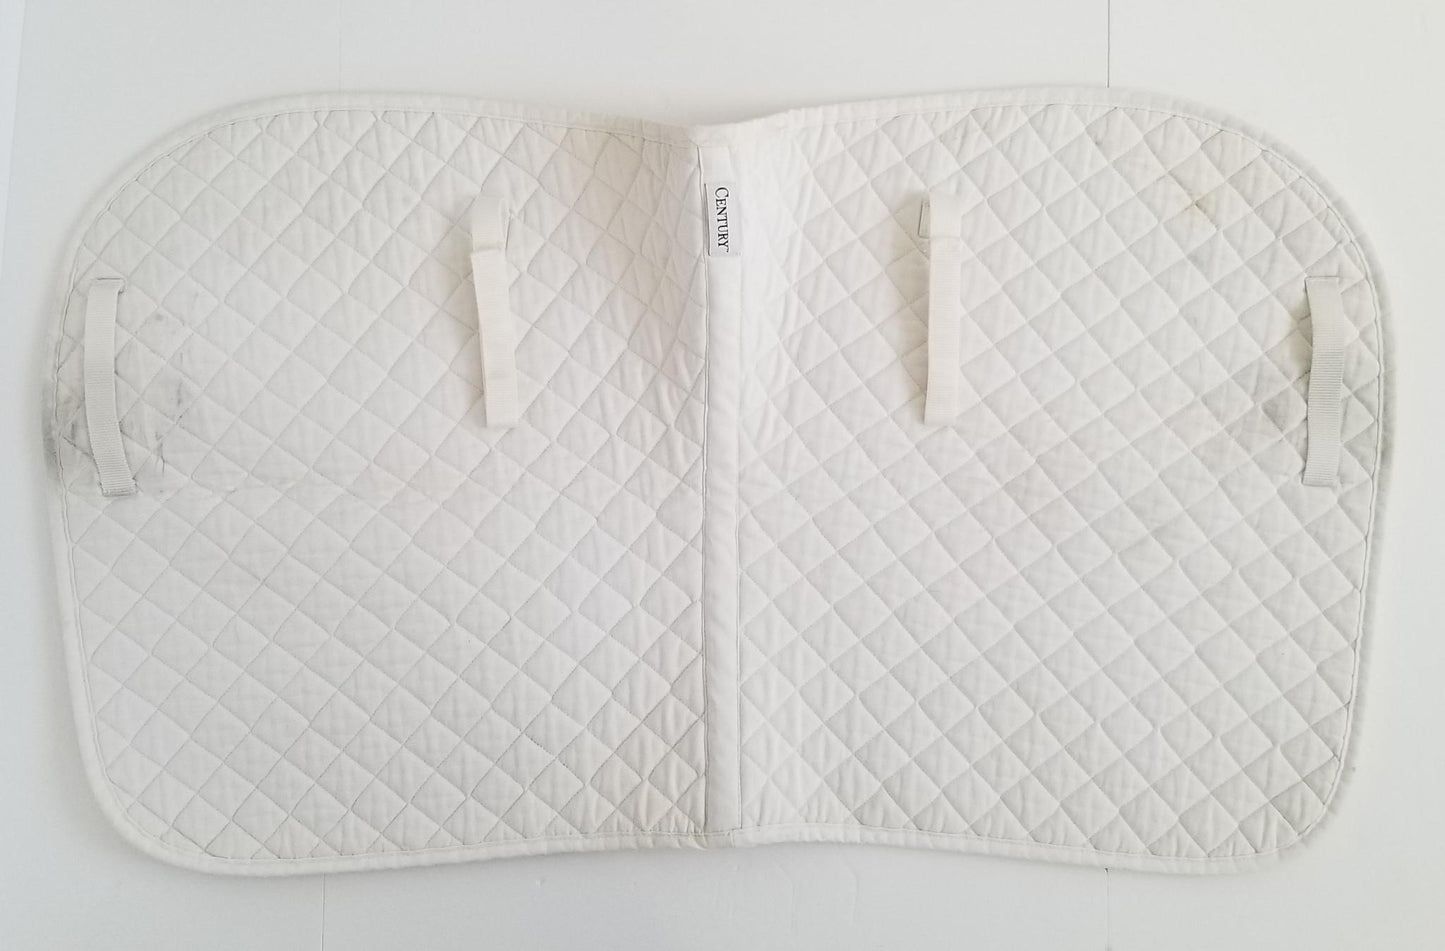 Centrury Classic Quilted All Purpose Pad - White - Regular